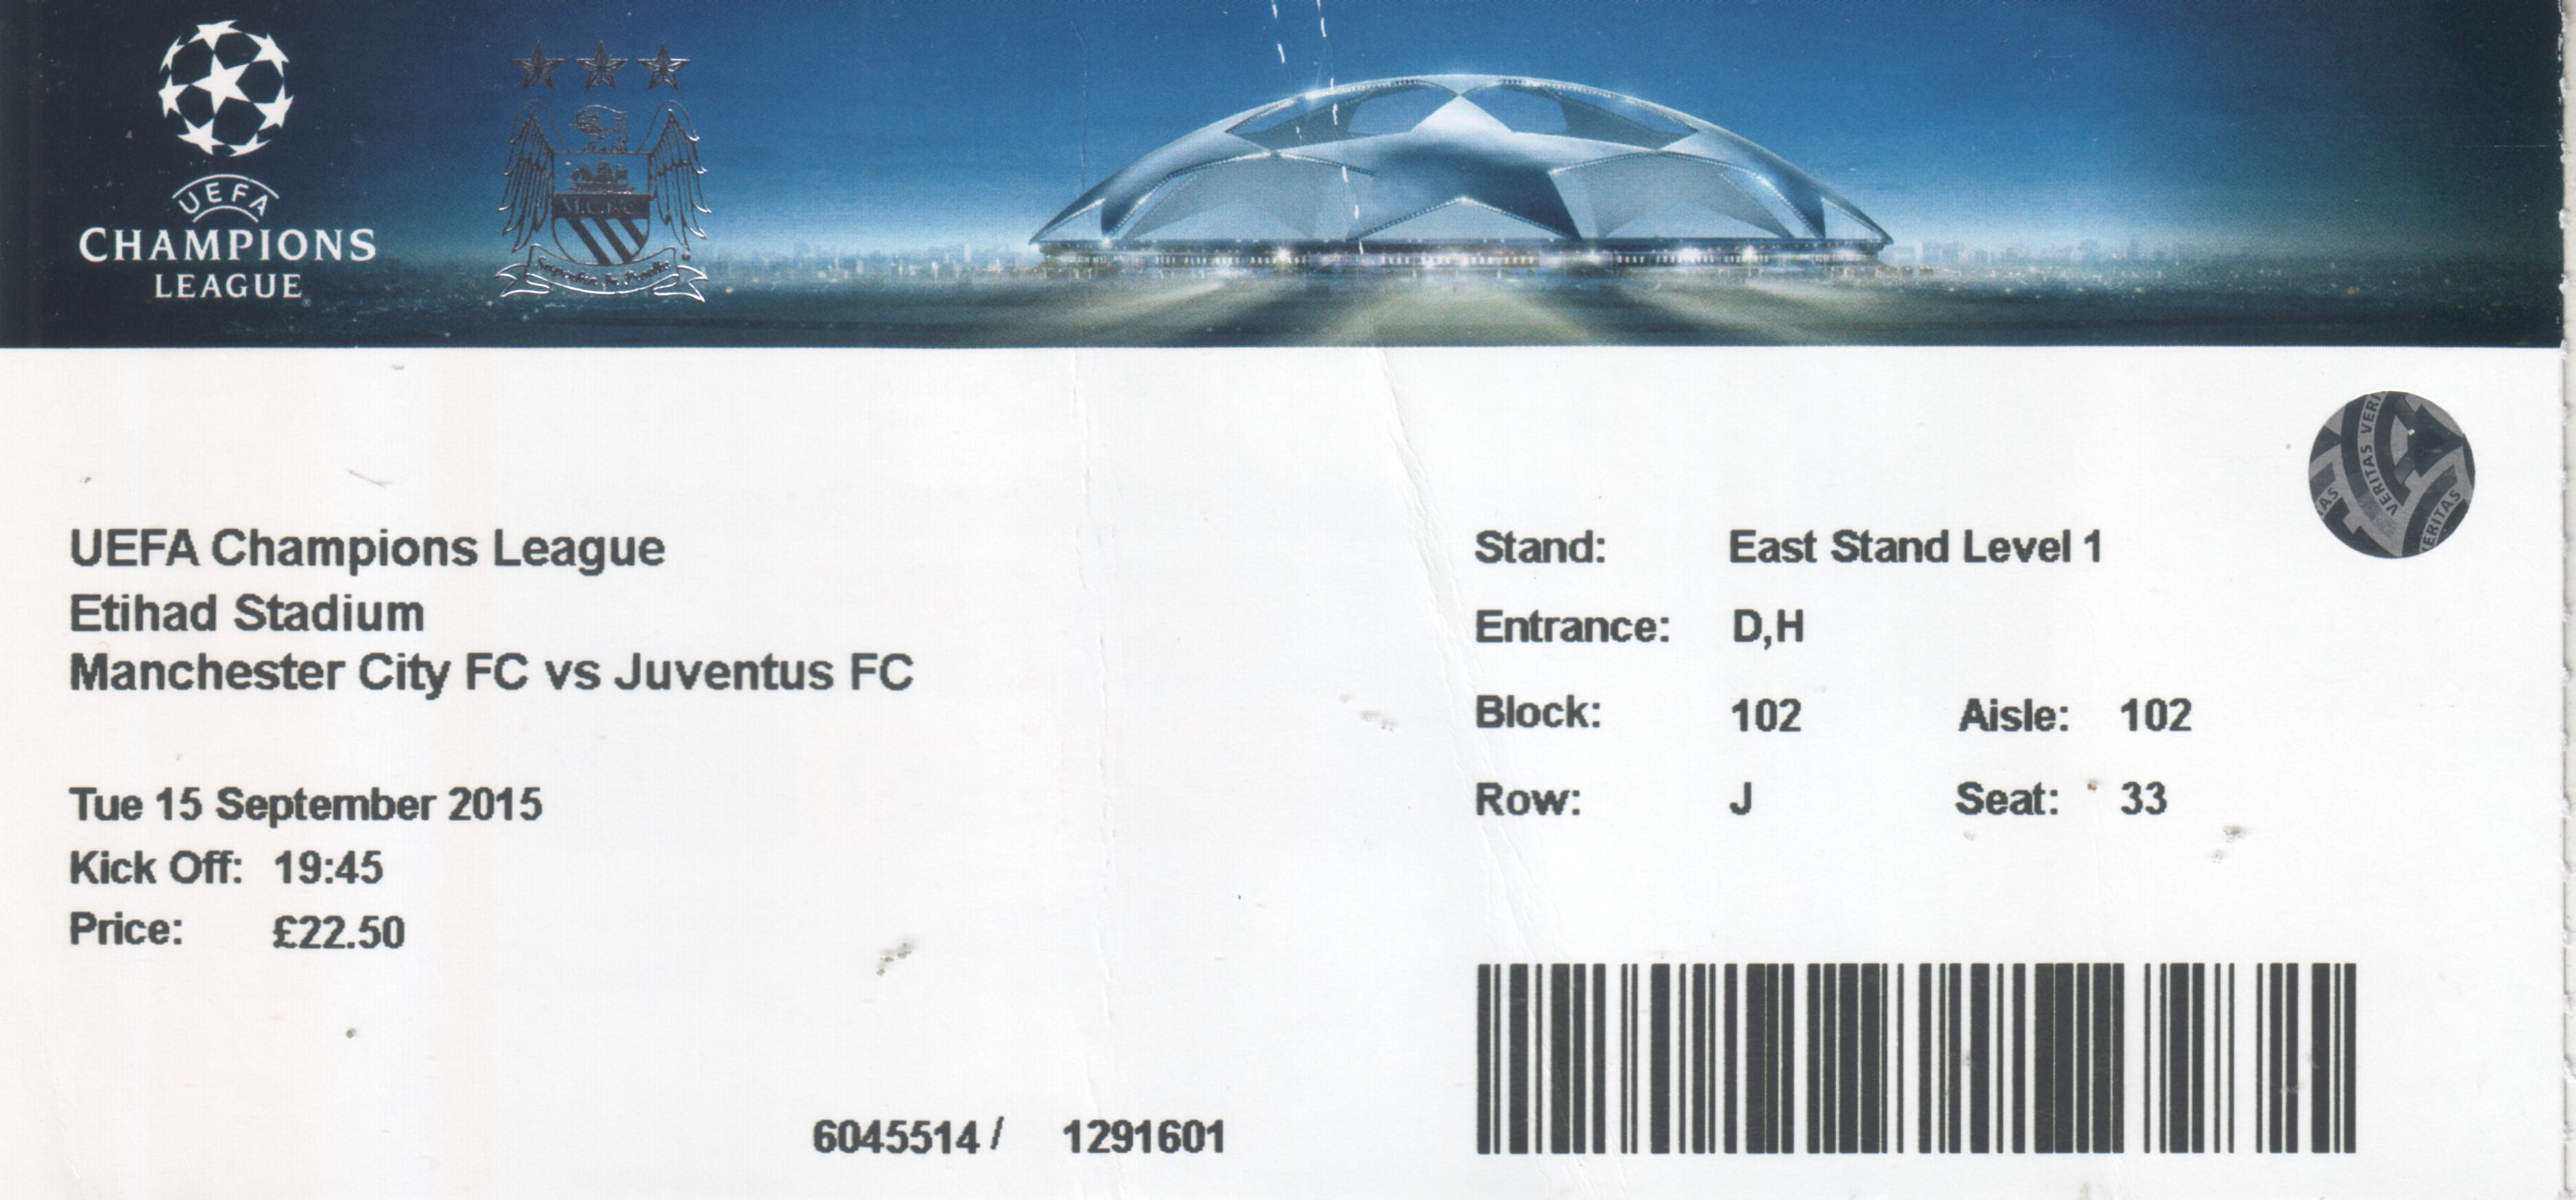 uefa final ticket price